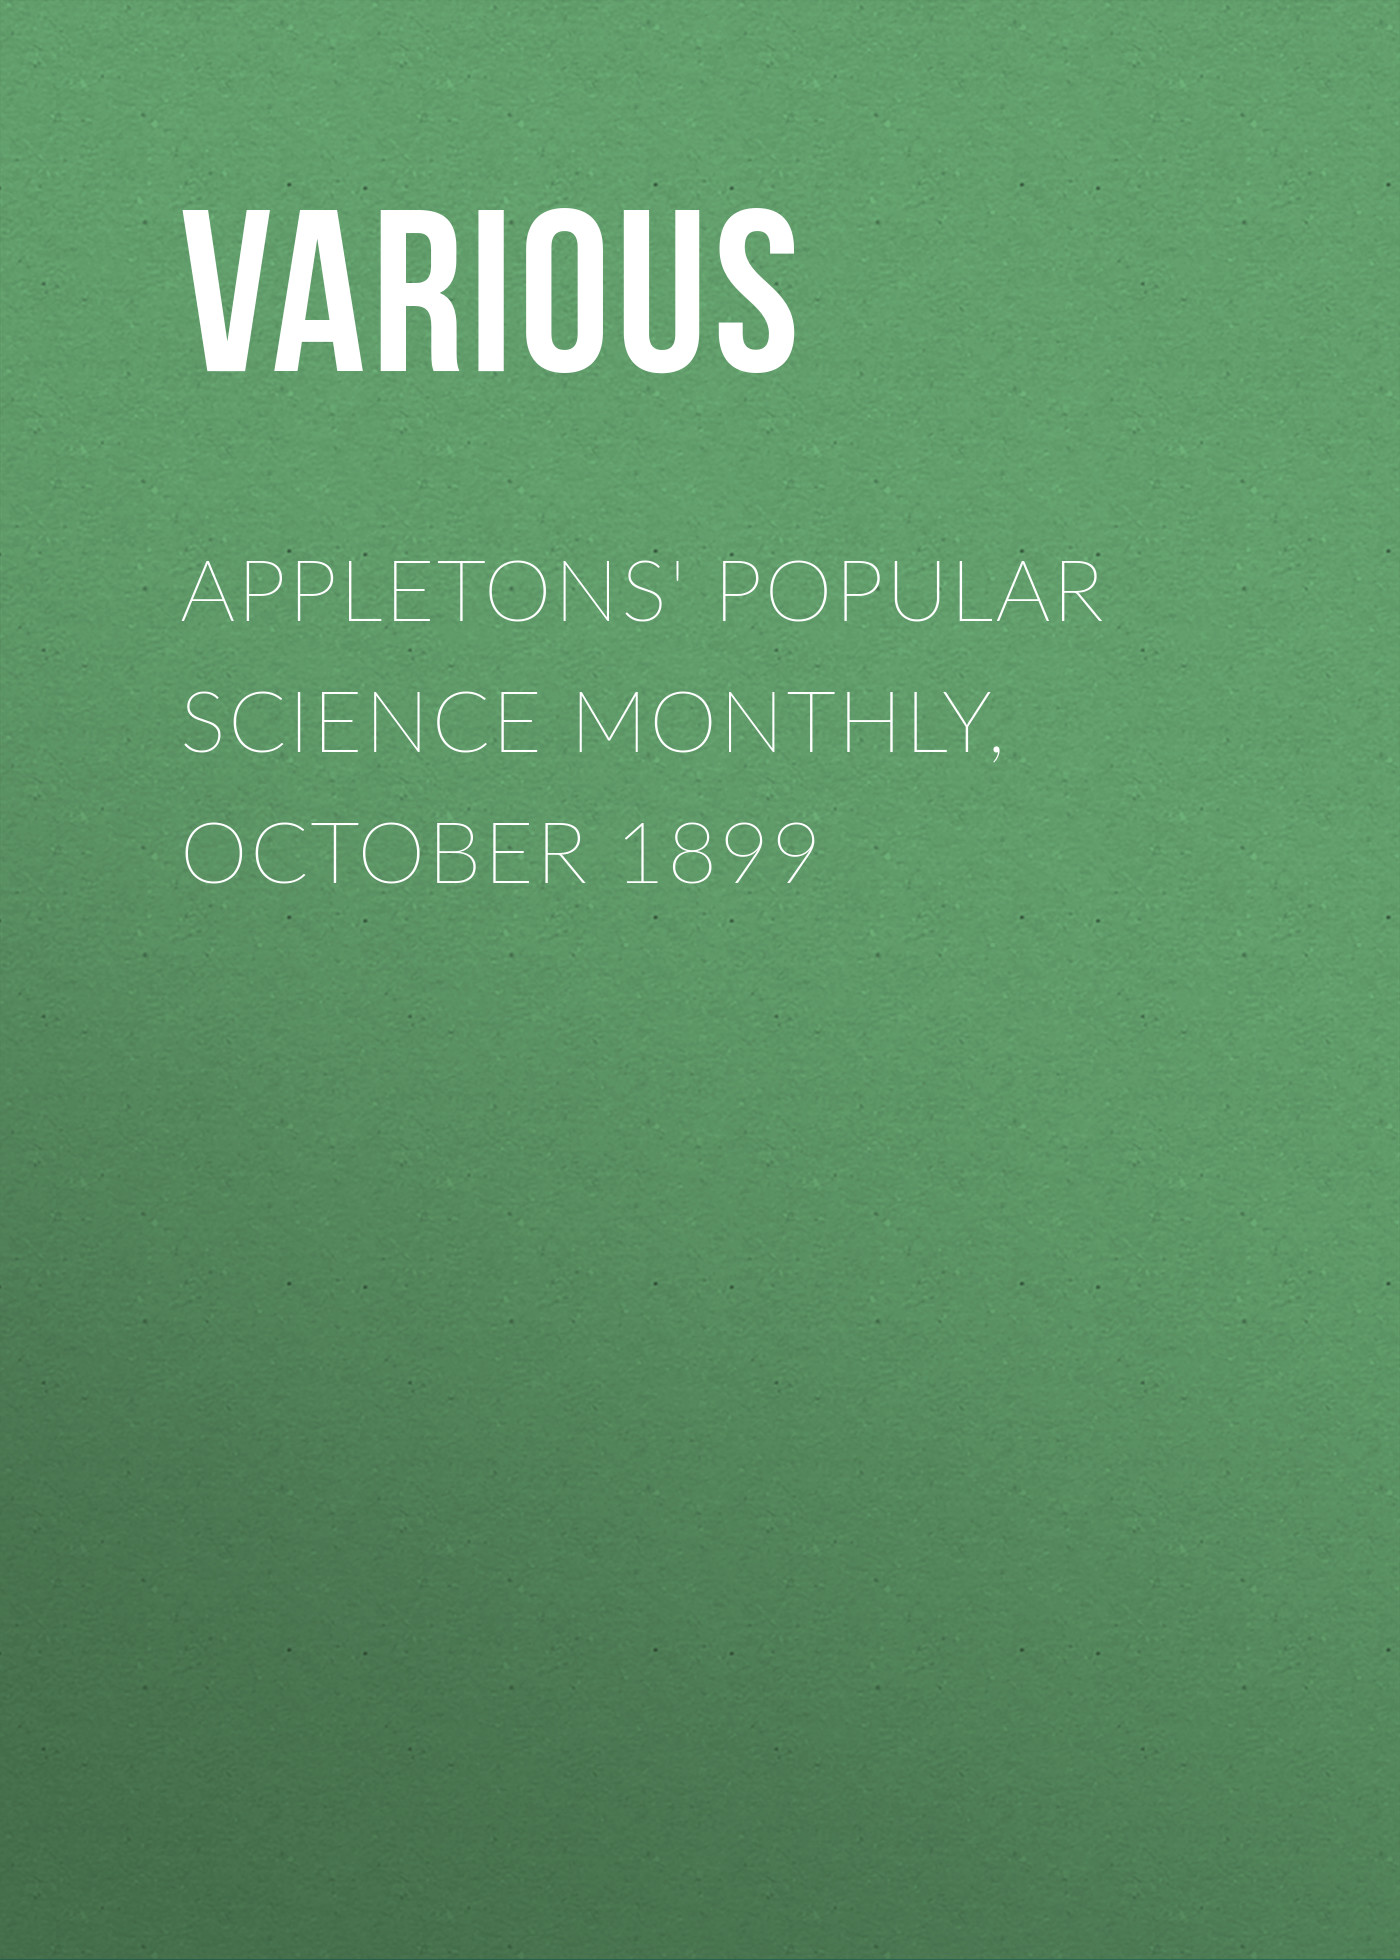 Appletons'Popular Science Monthly, October 1899